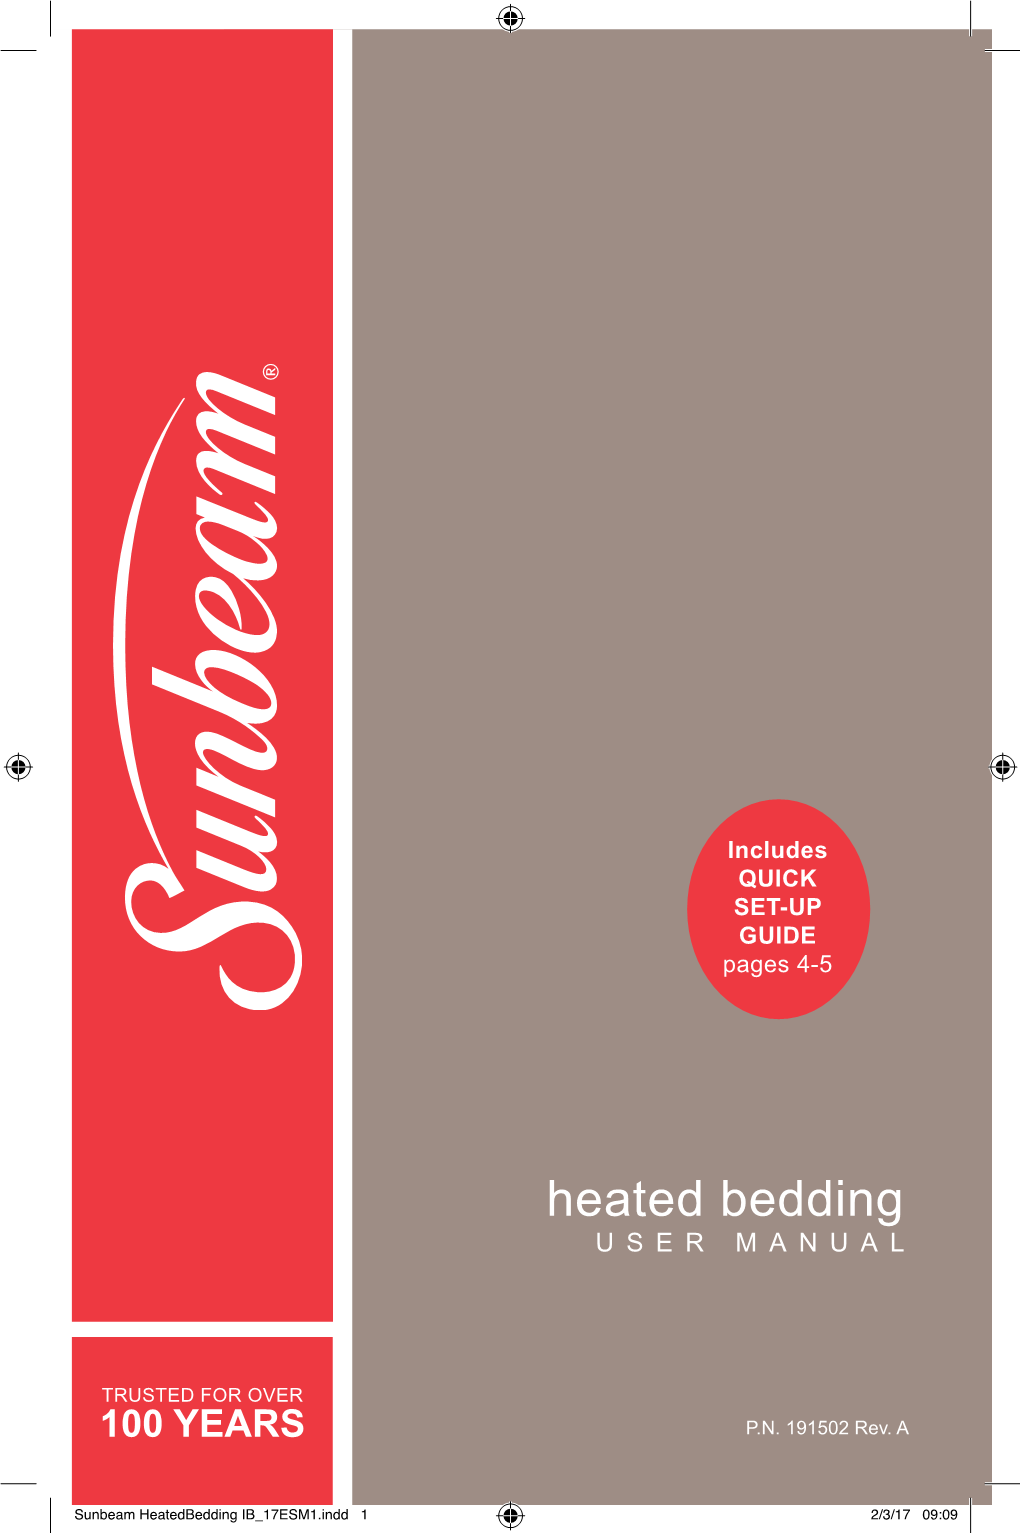 Heated Bedding USER MANUAL